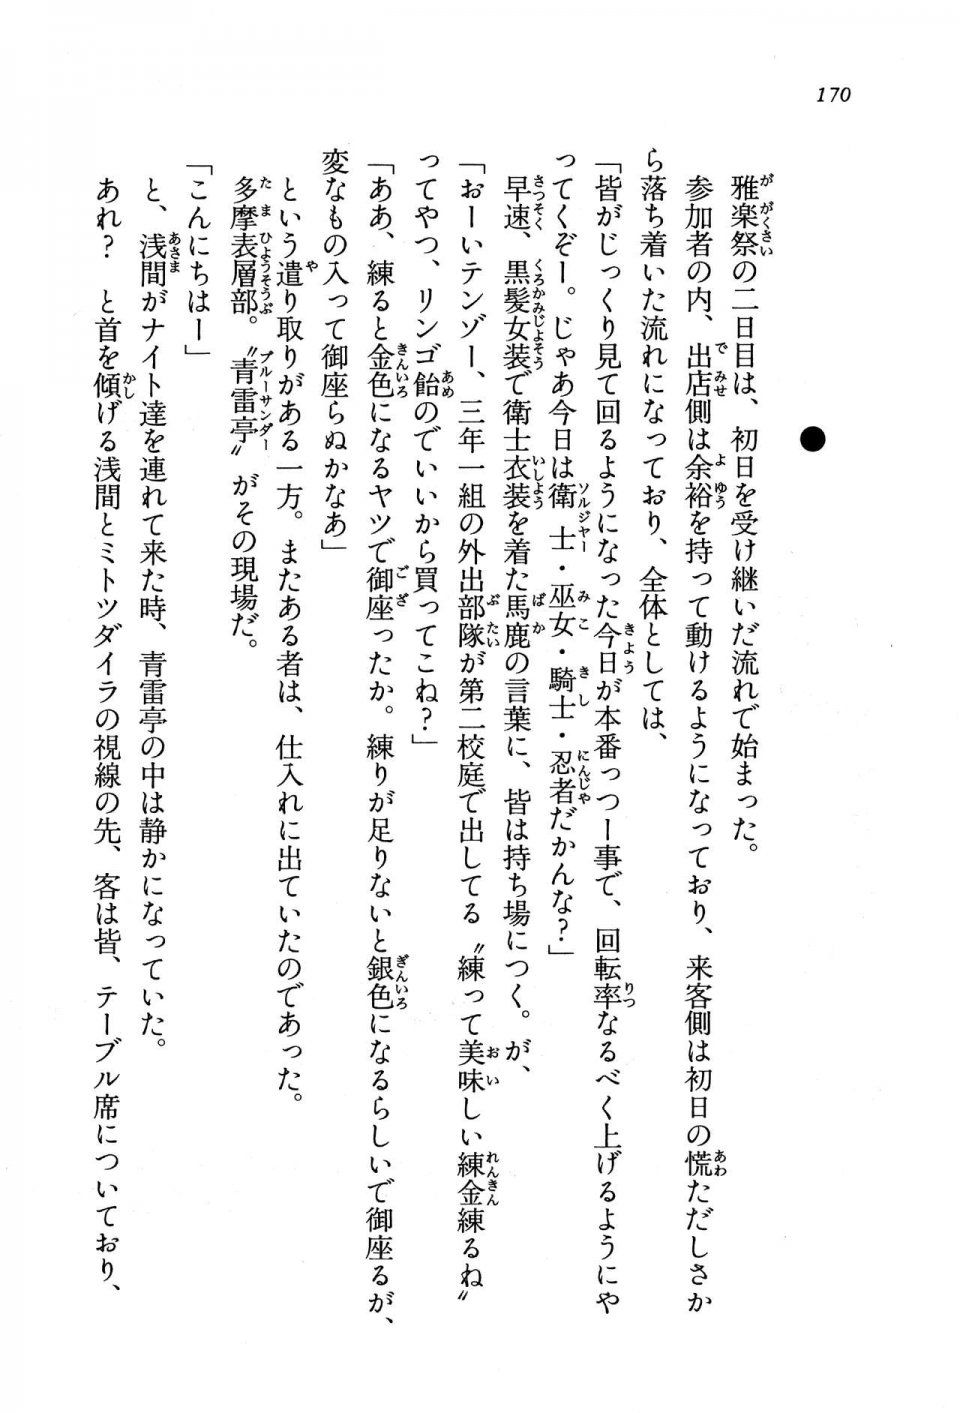 Kyoukai Senjou no Horizon BD Special Mininovel Vol 8(4B) - Photo #174